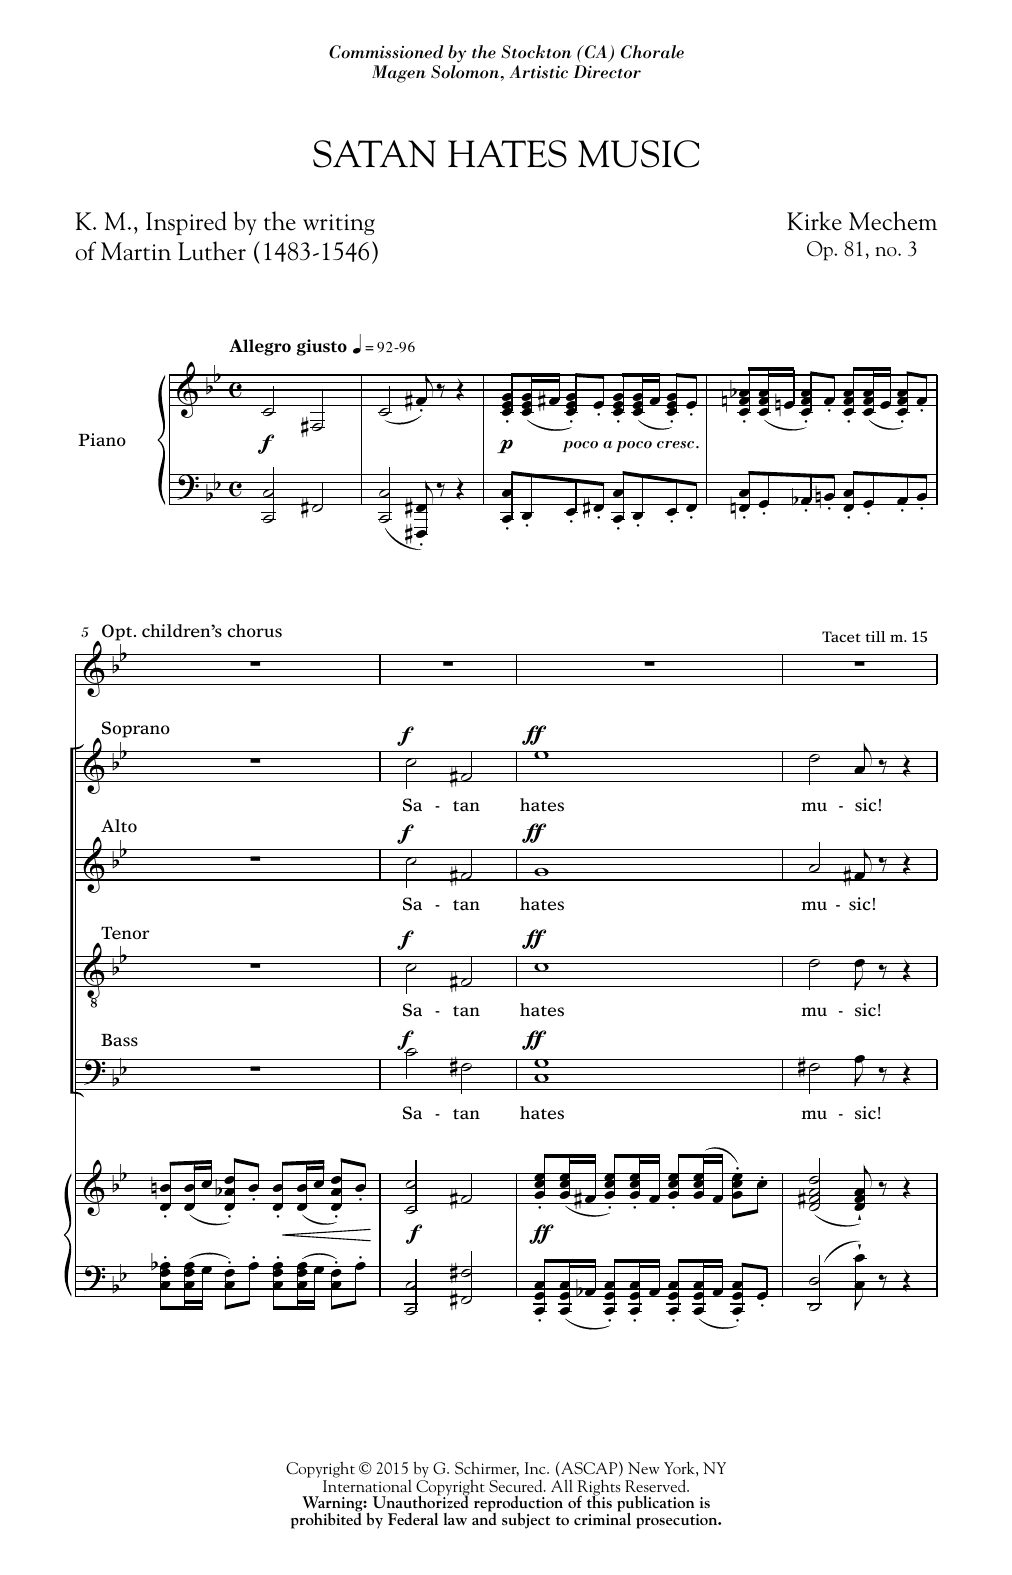 Kirke Mechem Satan Hates Music Sheet Music Notes & Chords for SATB - Download or Print PDF